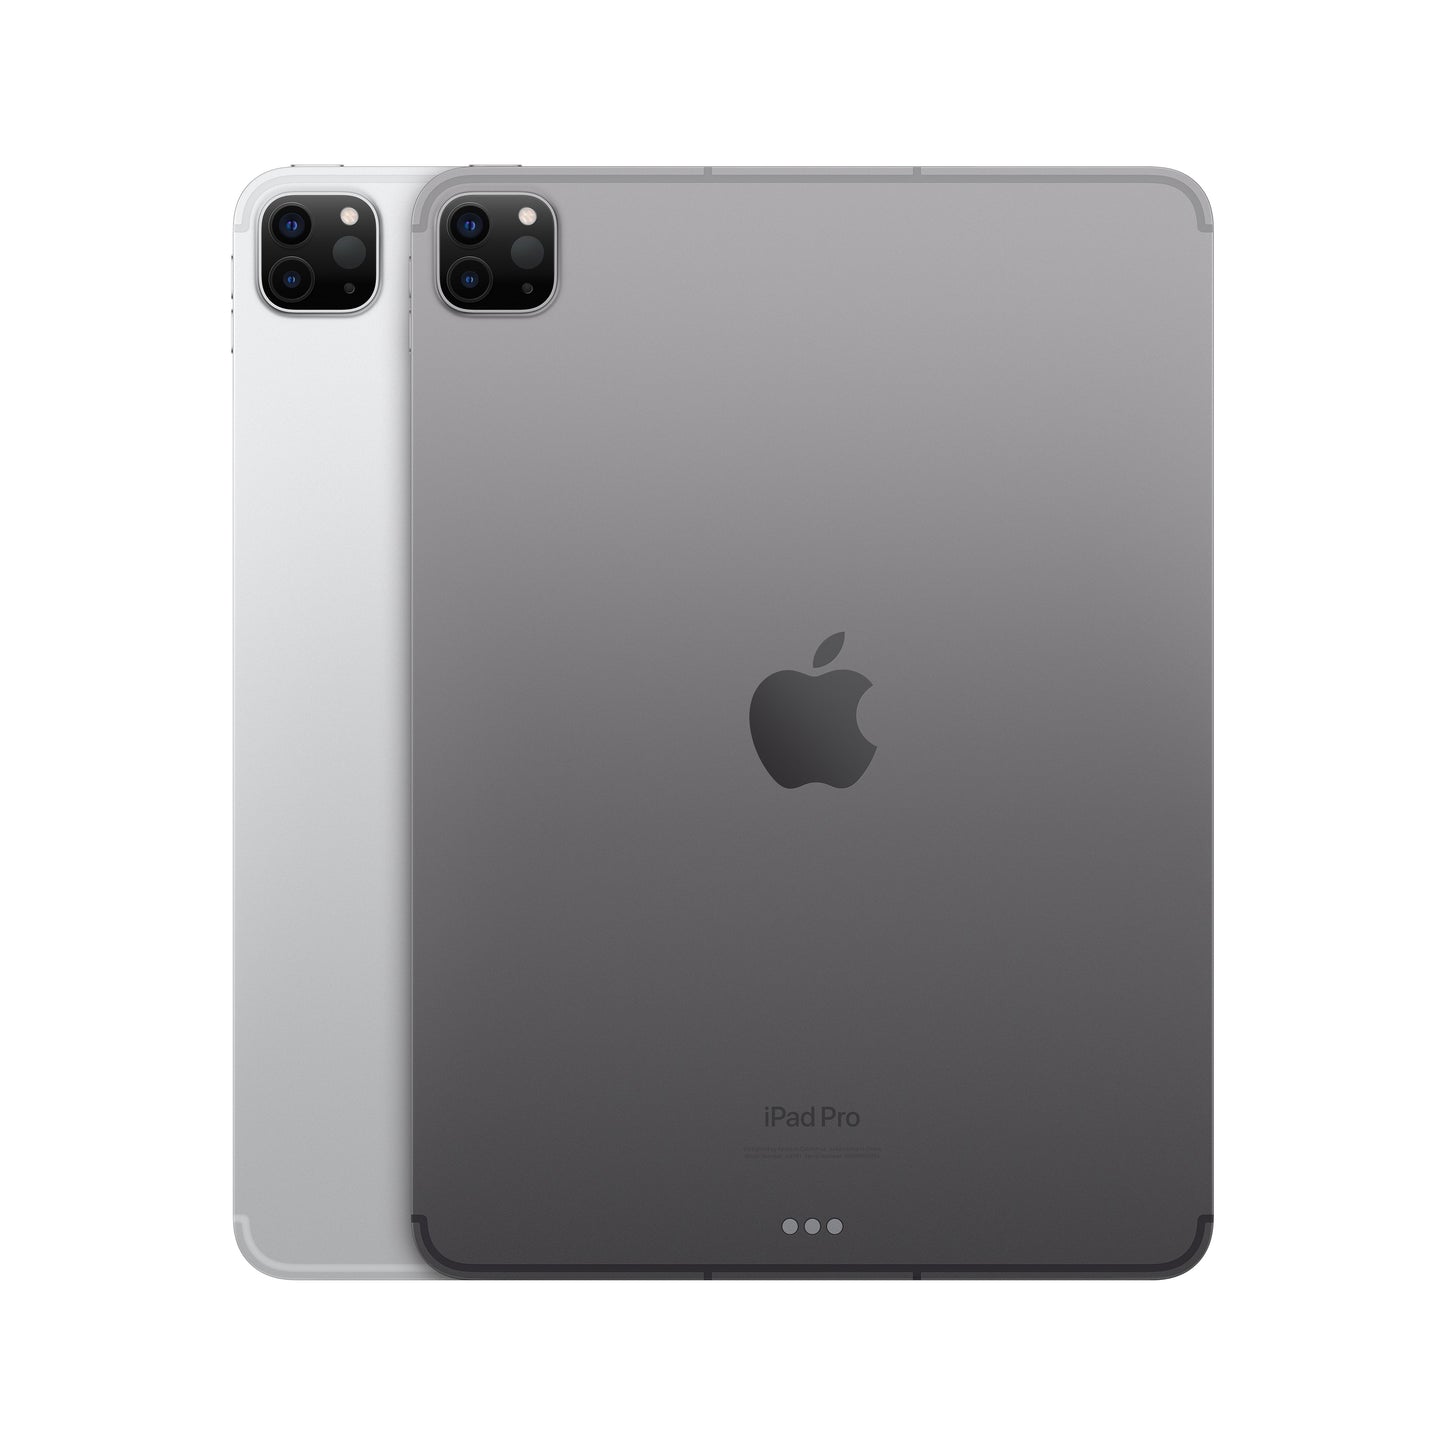 2022 11-inch iPad Pro Wi-Fi + Cellular 256GB - Space Gray (4th generation)